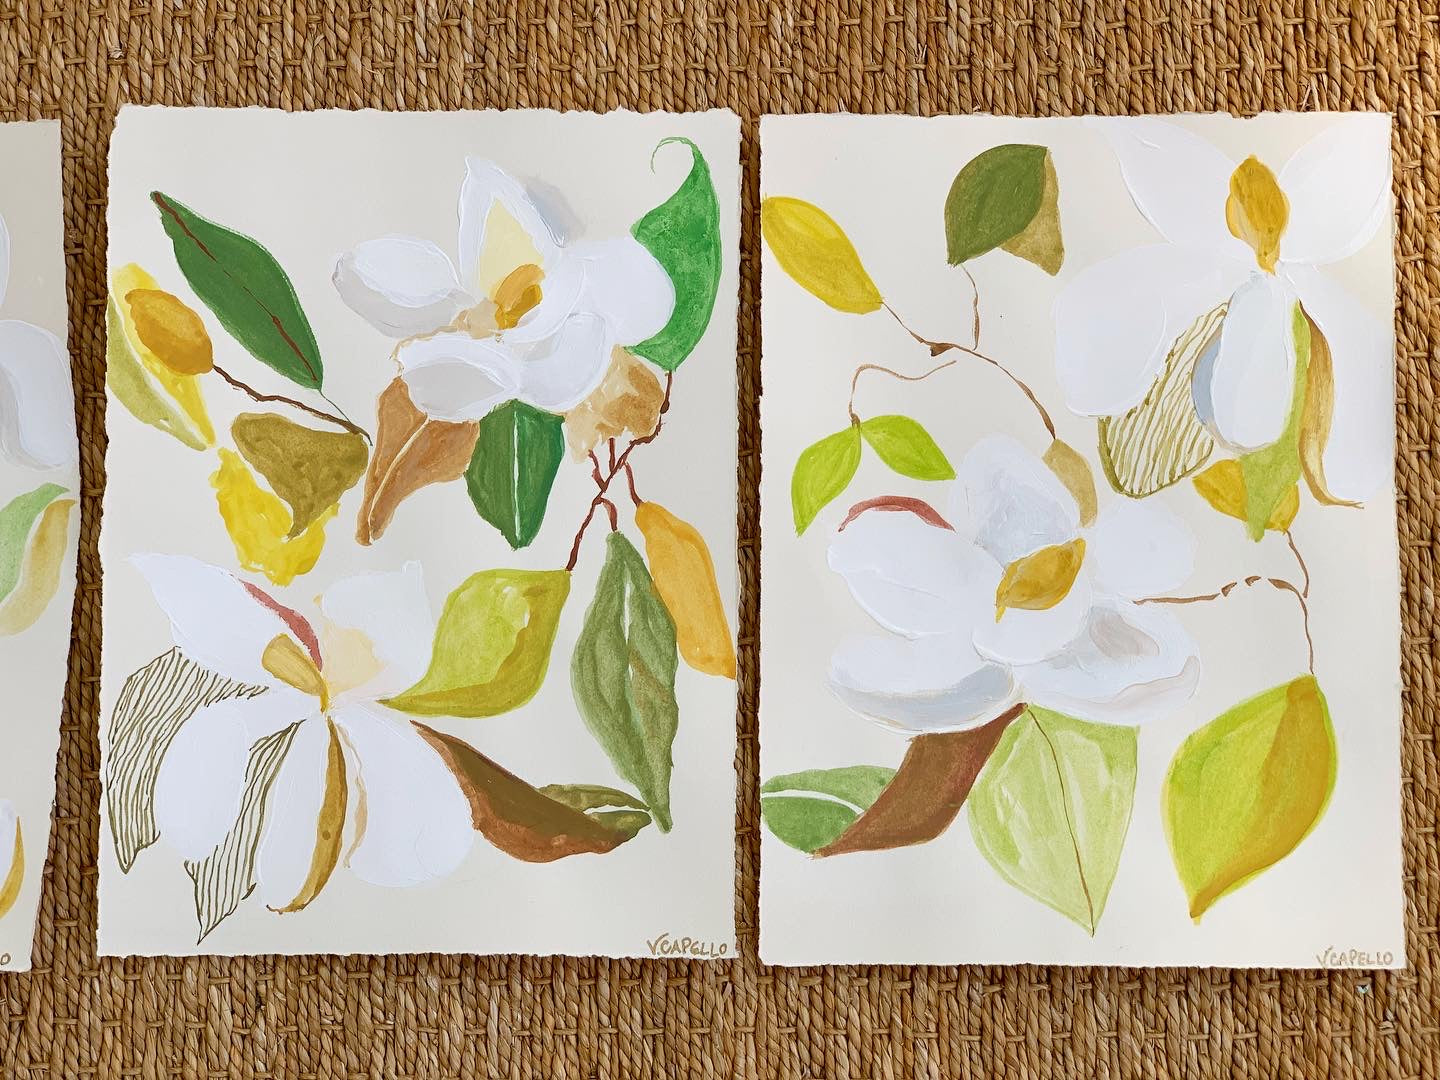 “Magnolia Mixed Media Original Art, Series B” by Victoria C. Designs